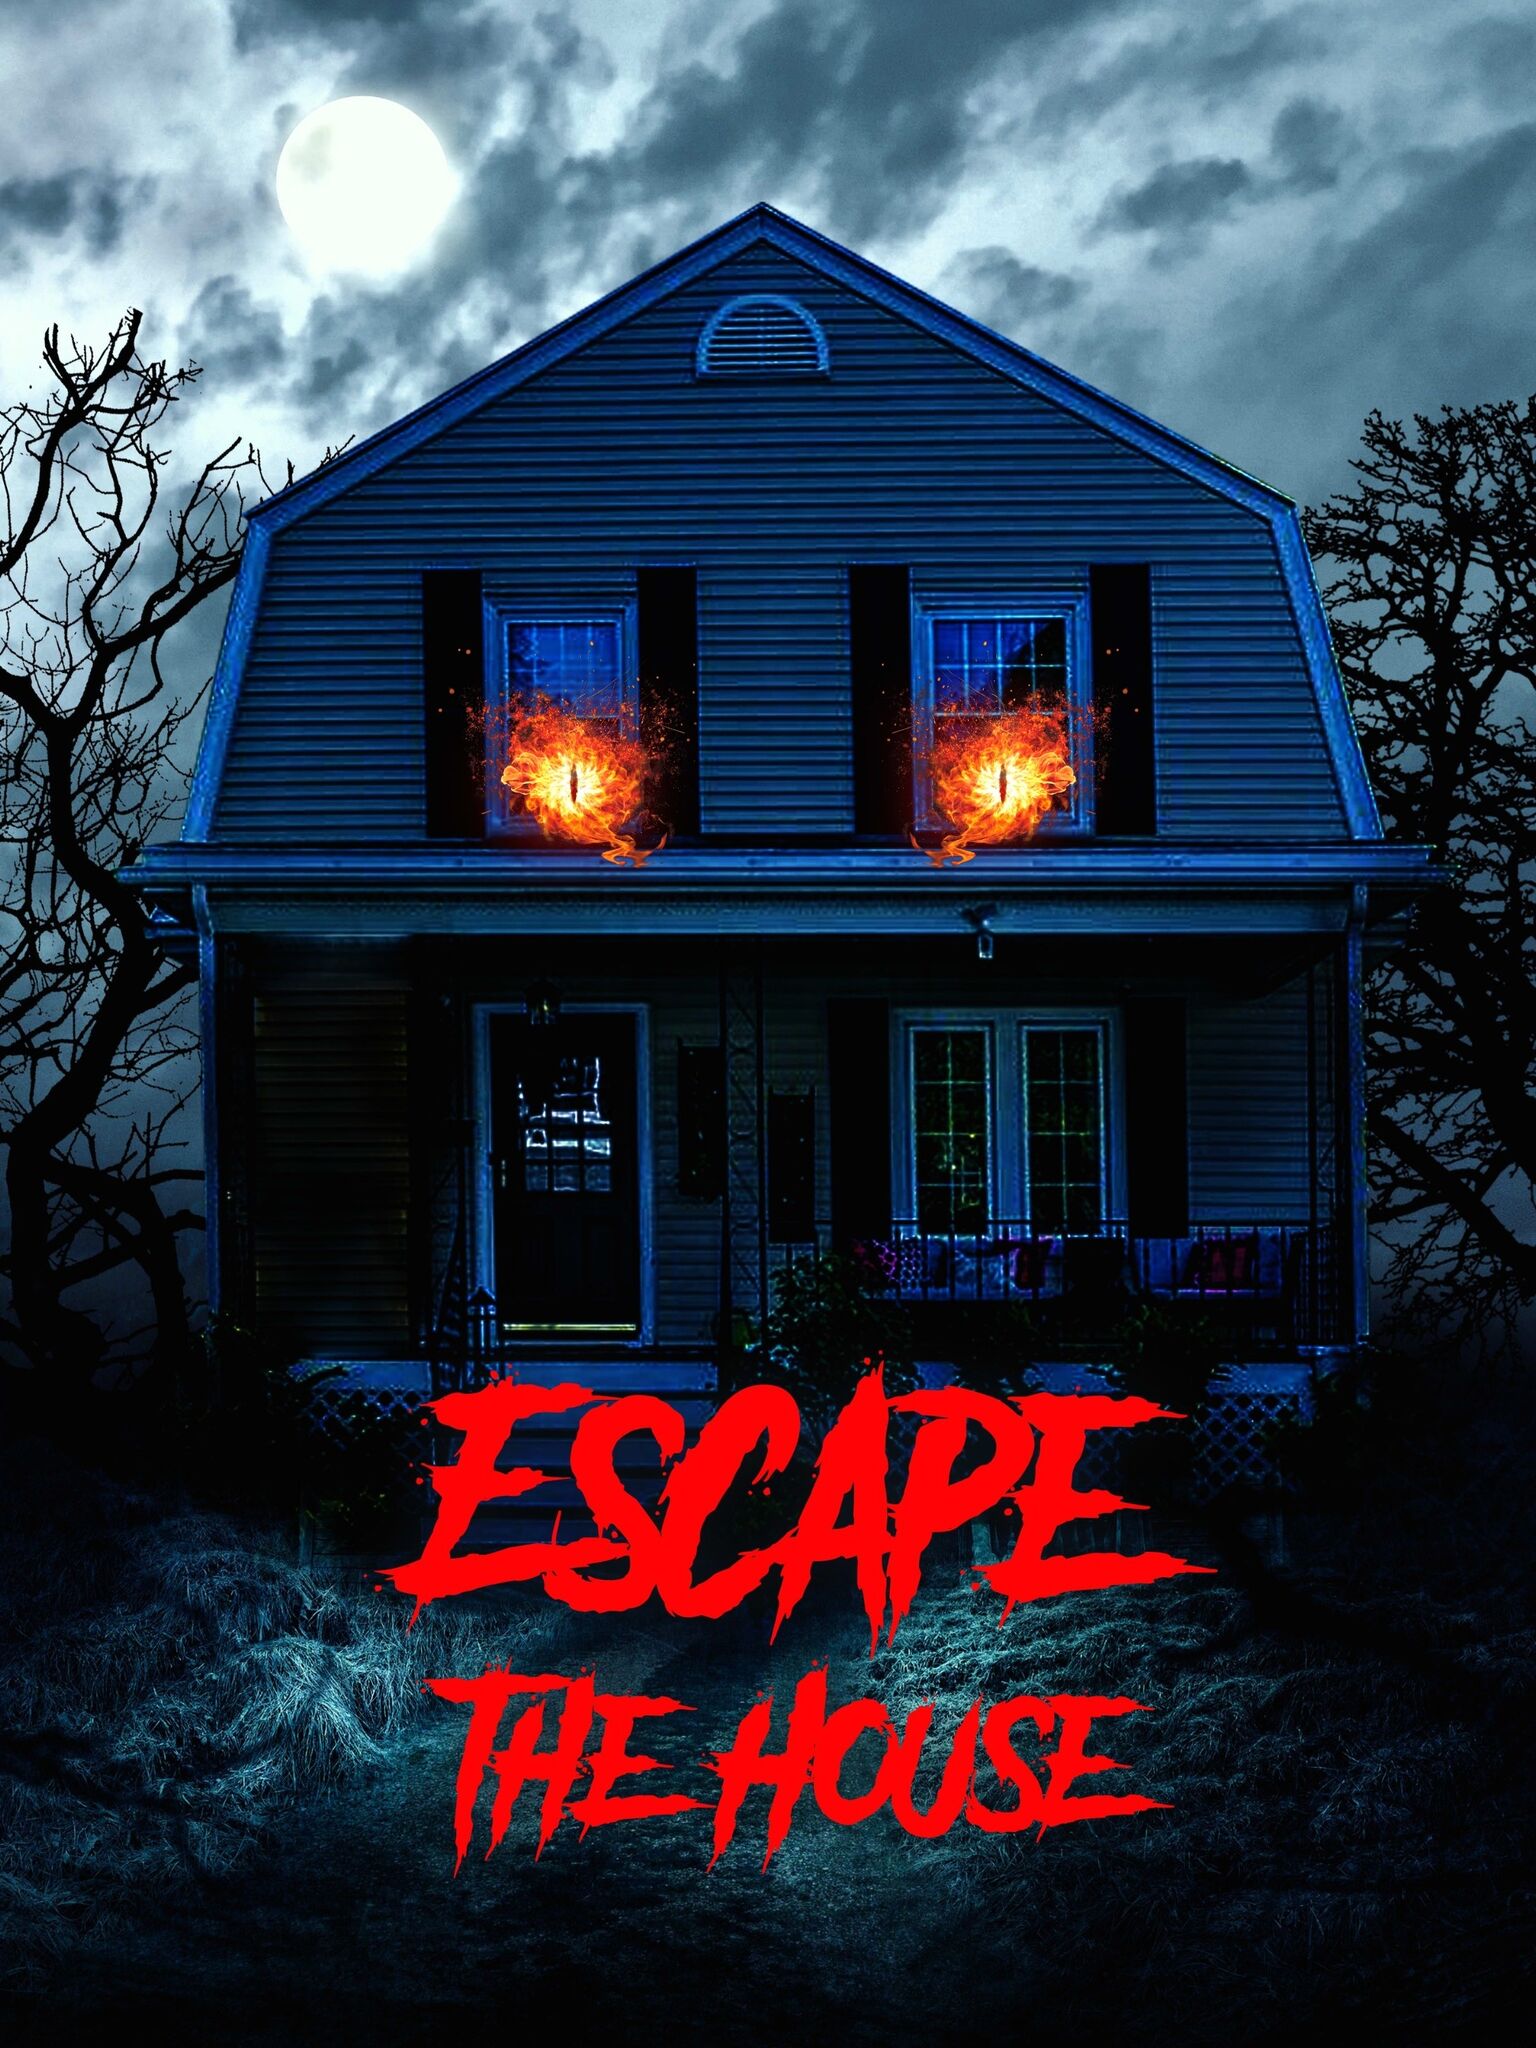 ESCAPE THE HOUSE